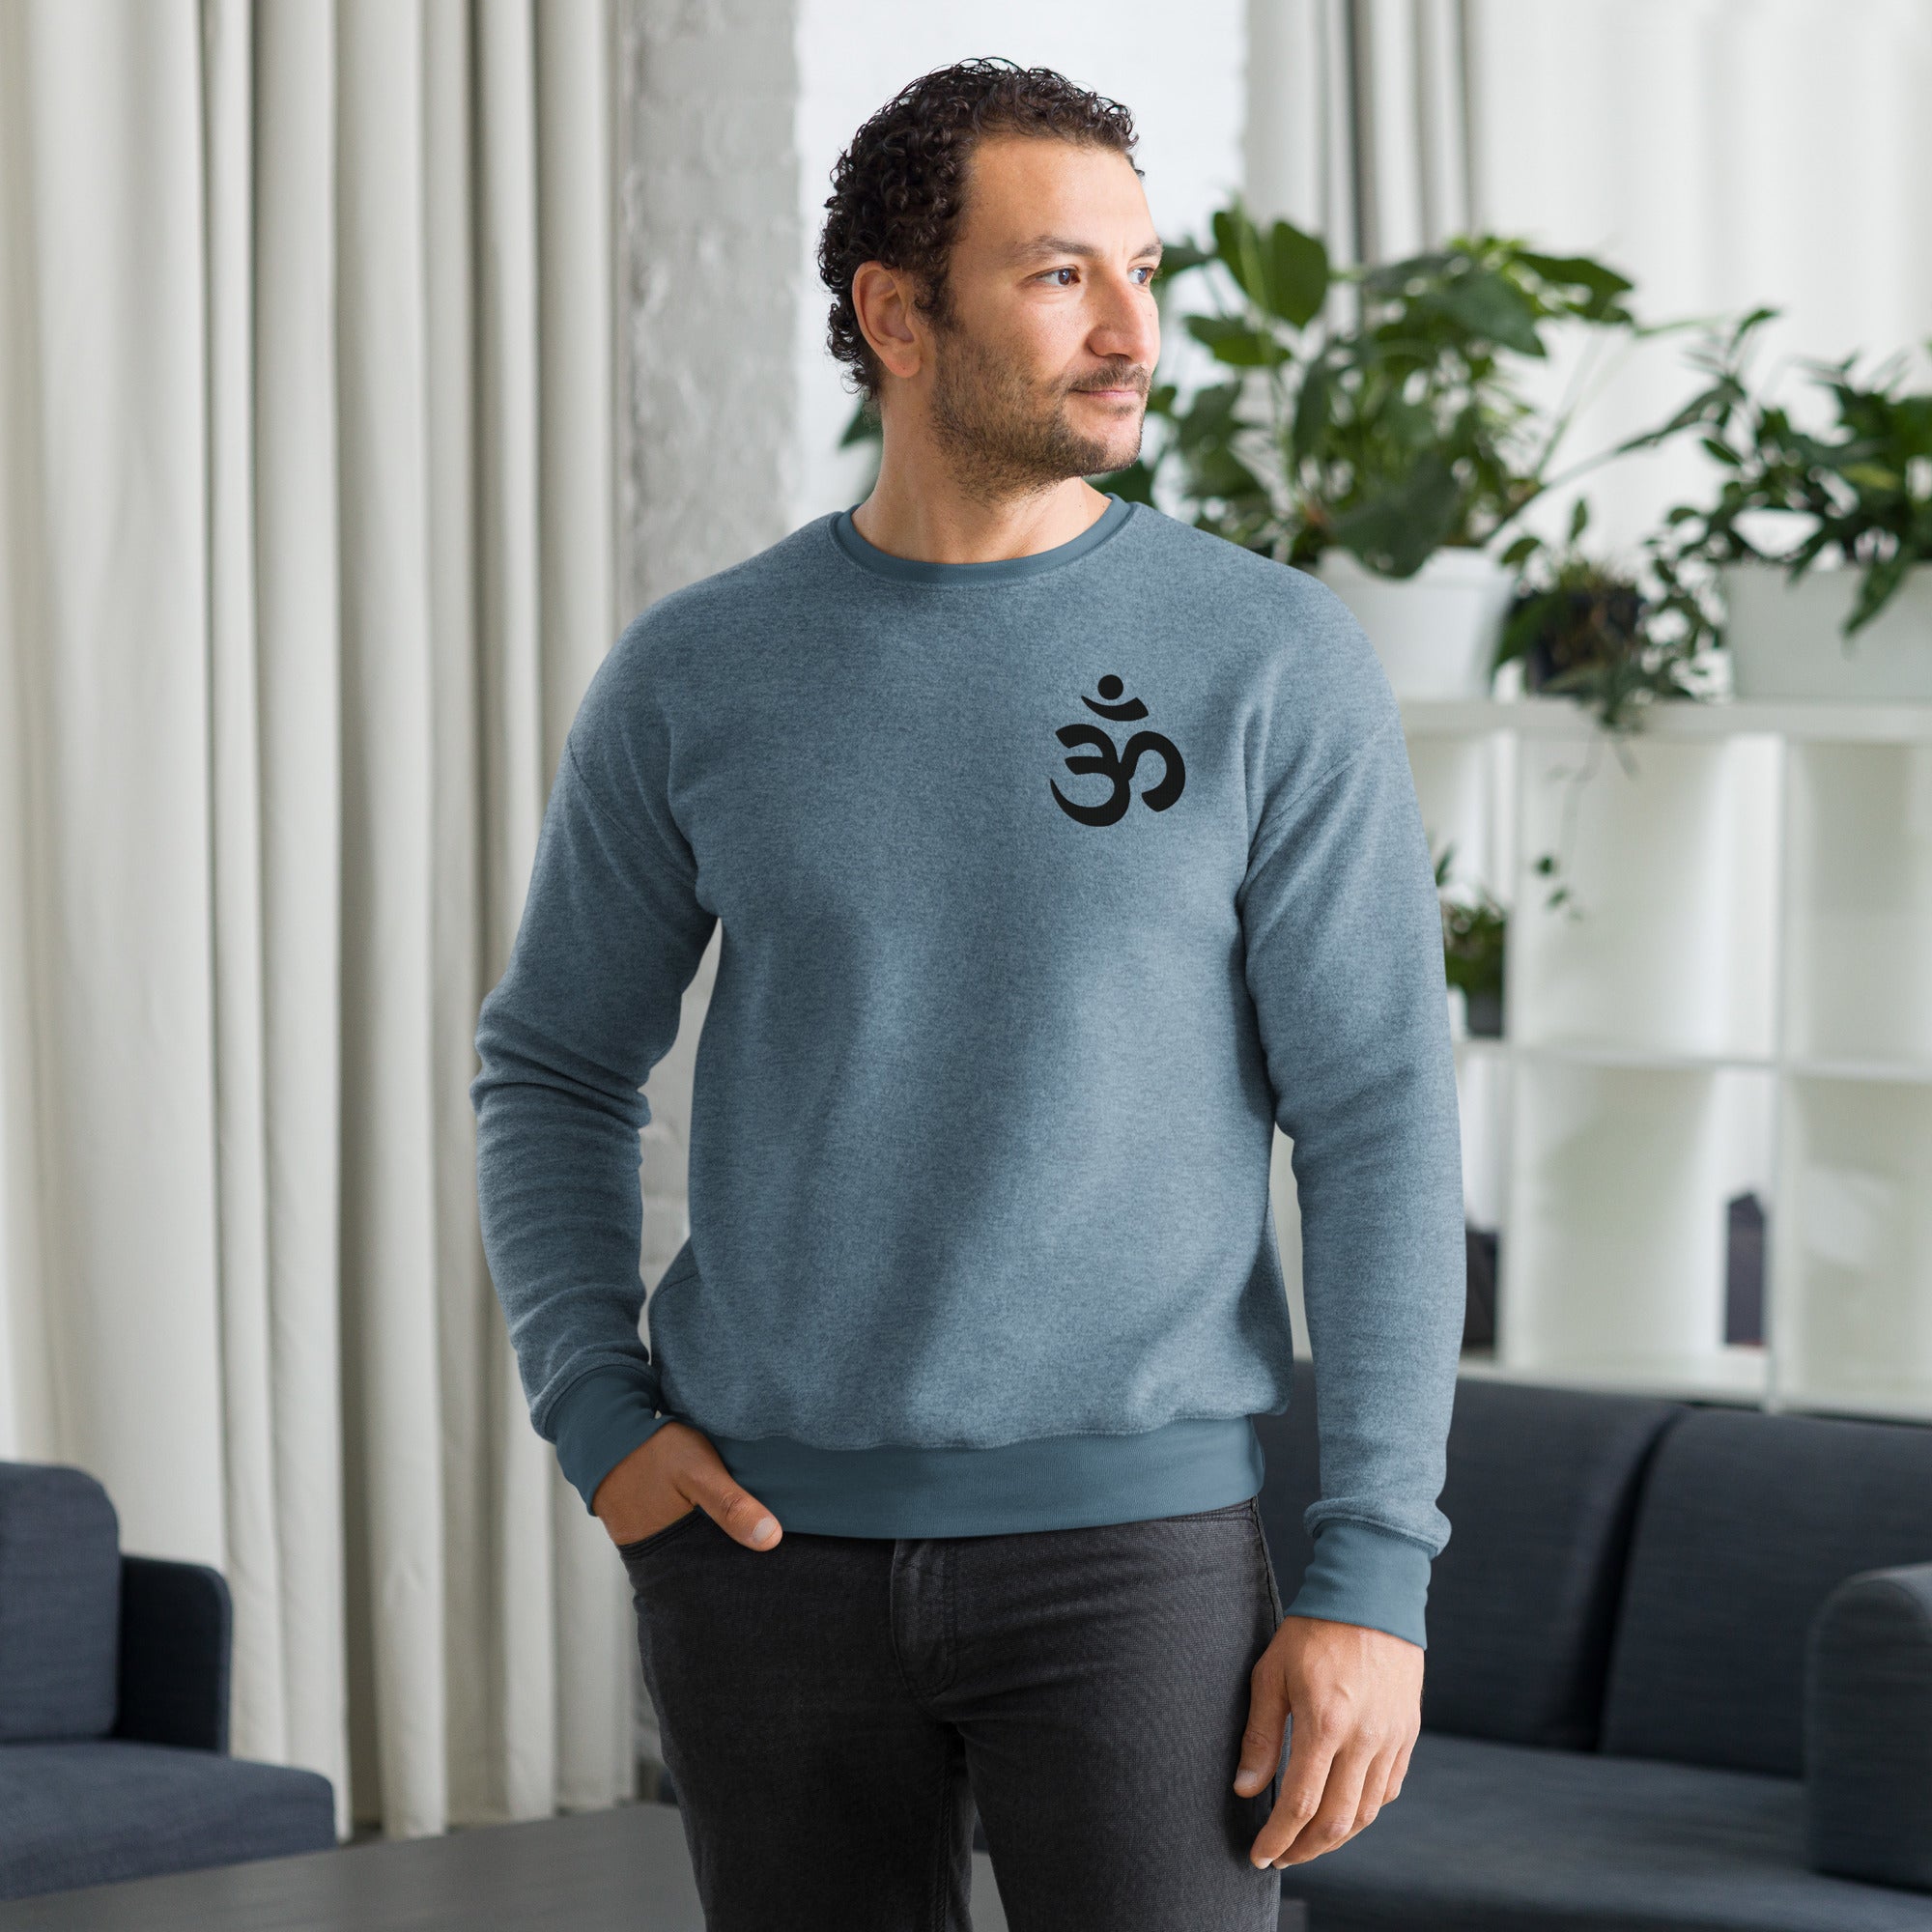 Couple Matching - Unisex sueded fleece yoga sweatshirt - Personal Hour for Yoga and Meditations 